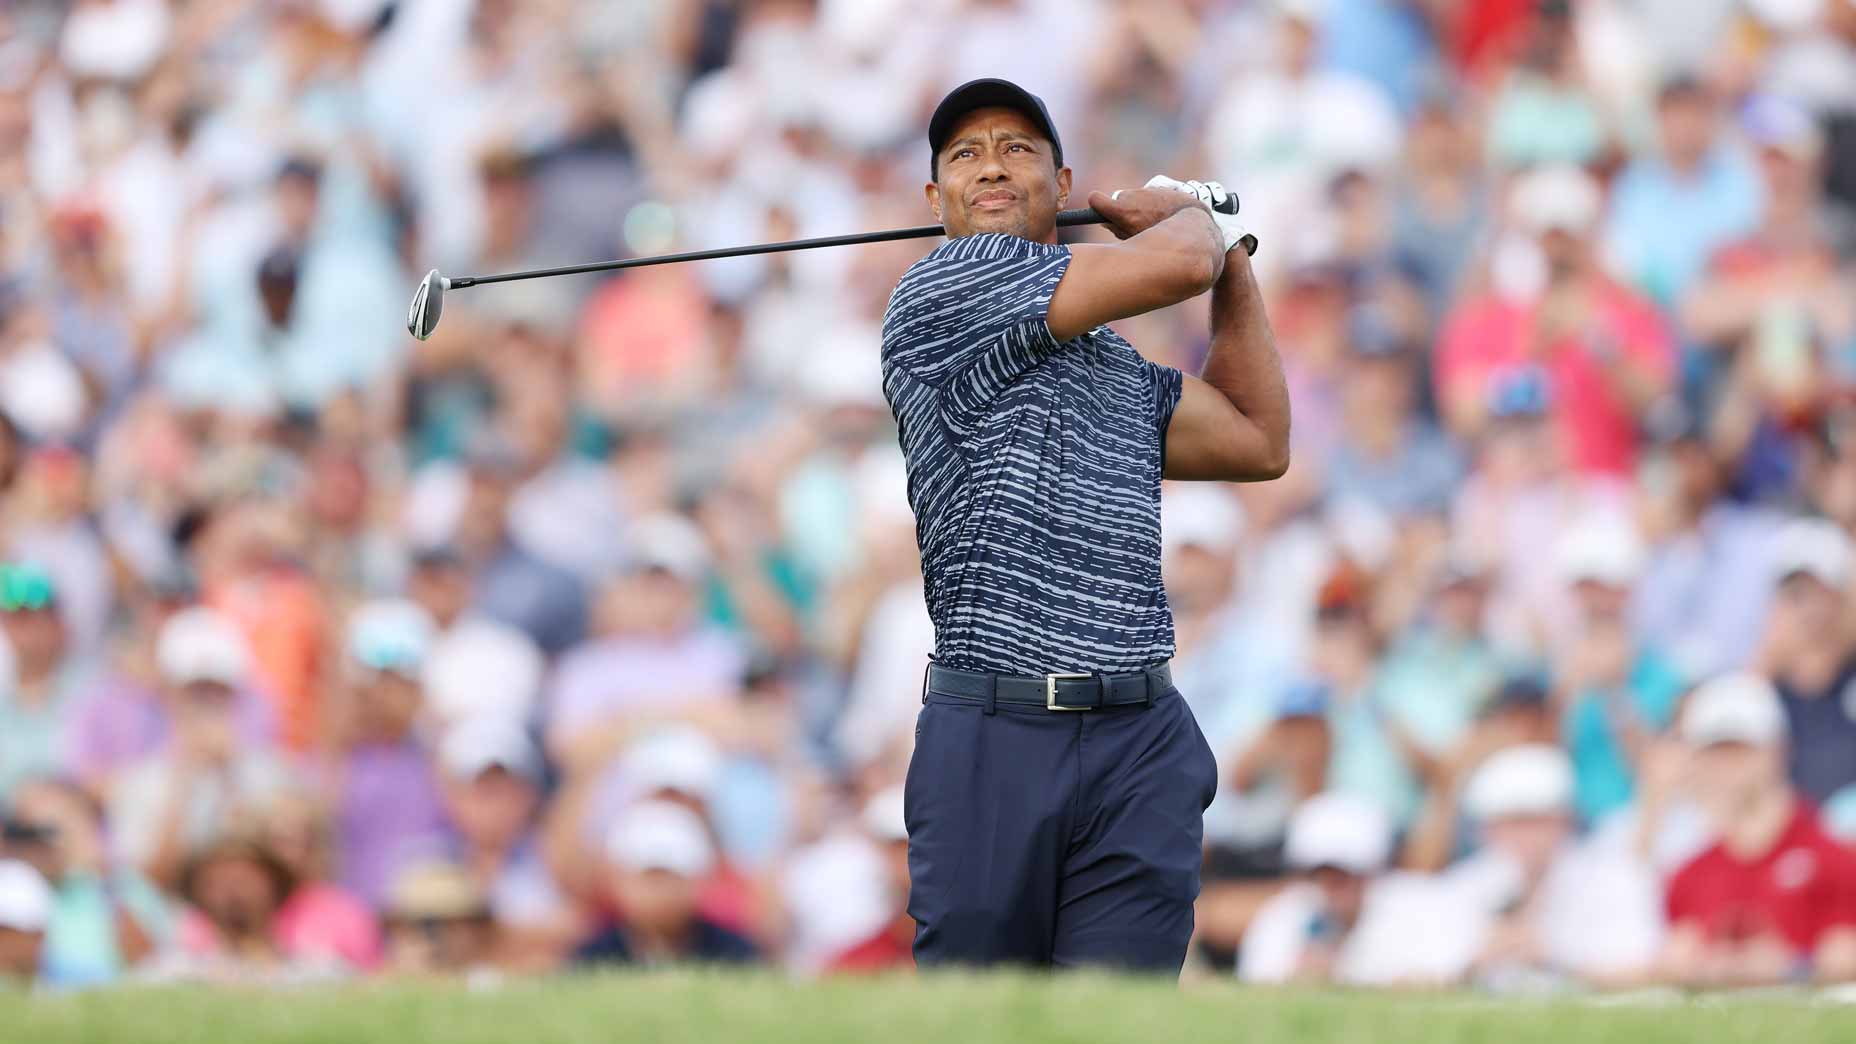 Tiger Woods hits off 1st tee Thursday at 2022 PGA Championship